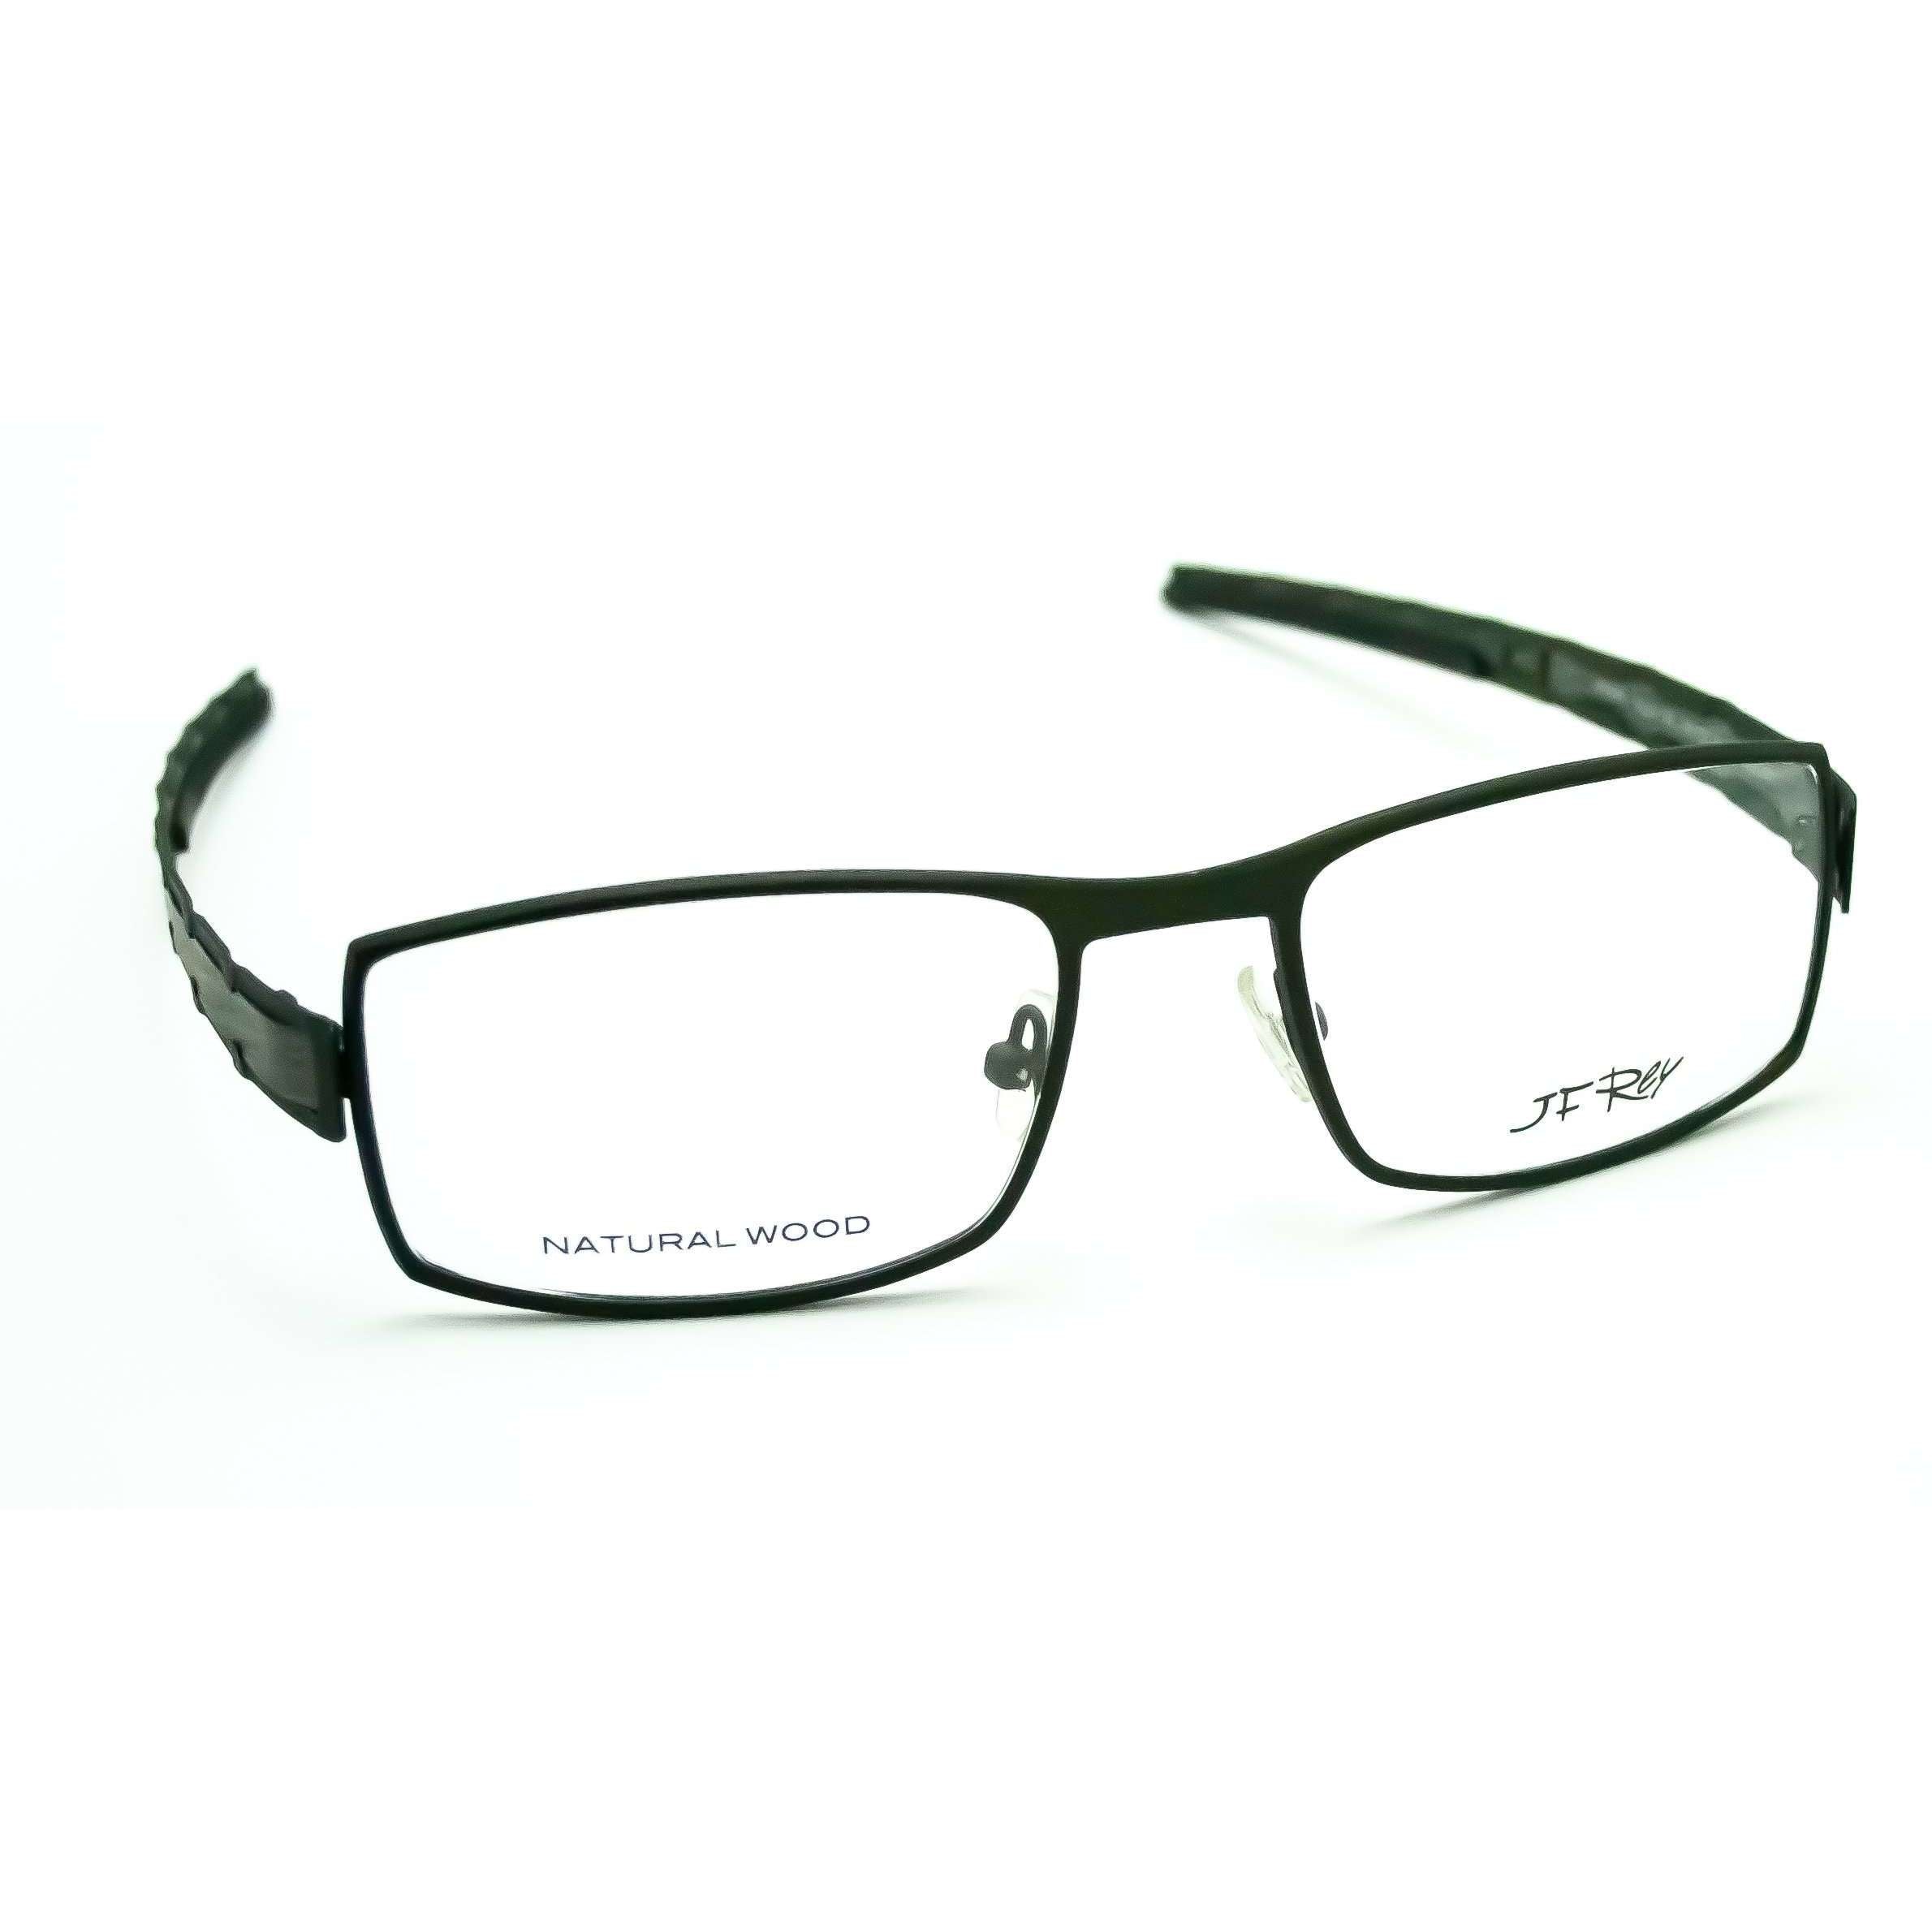 JF Rey Model 2466 Black Designer Glasses